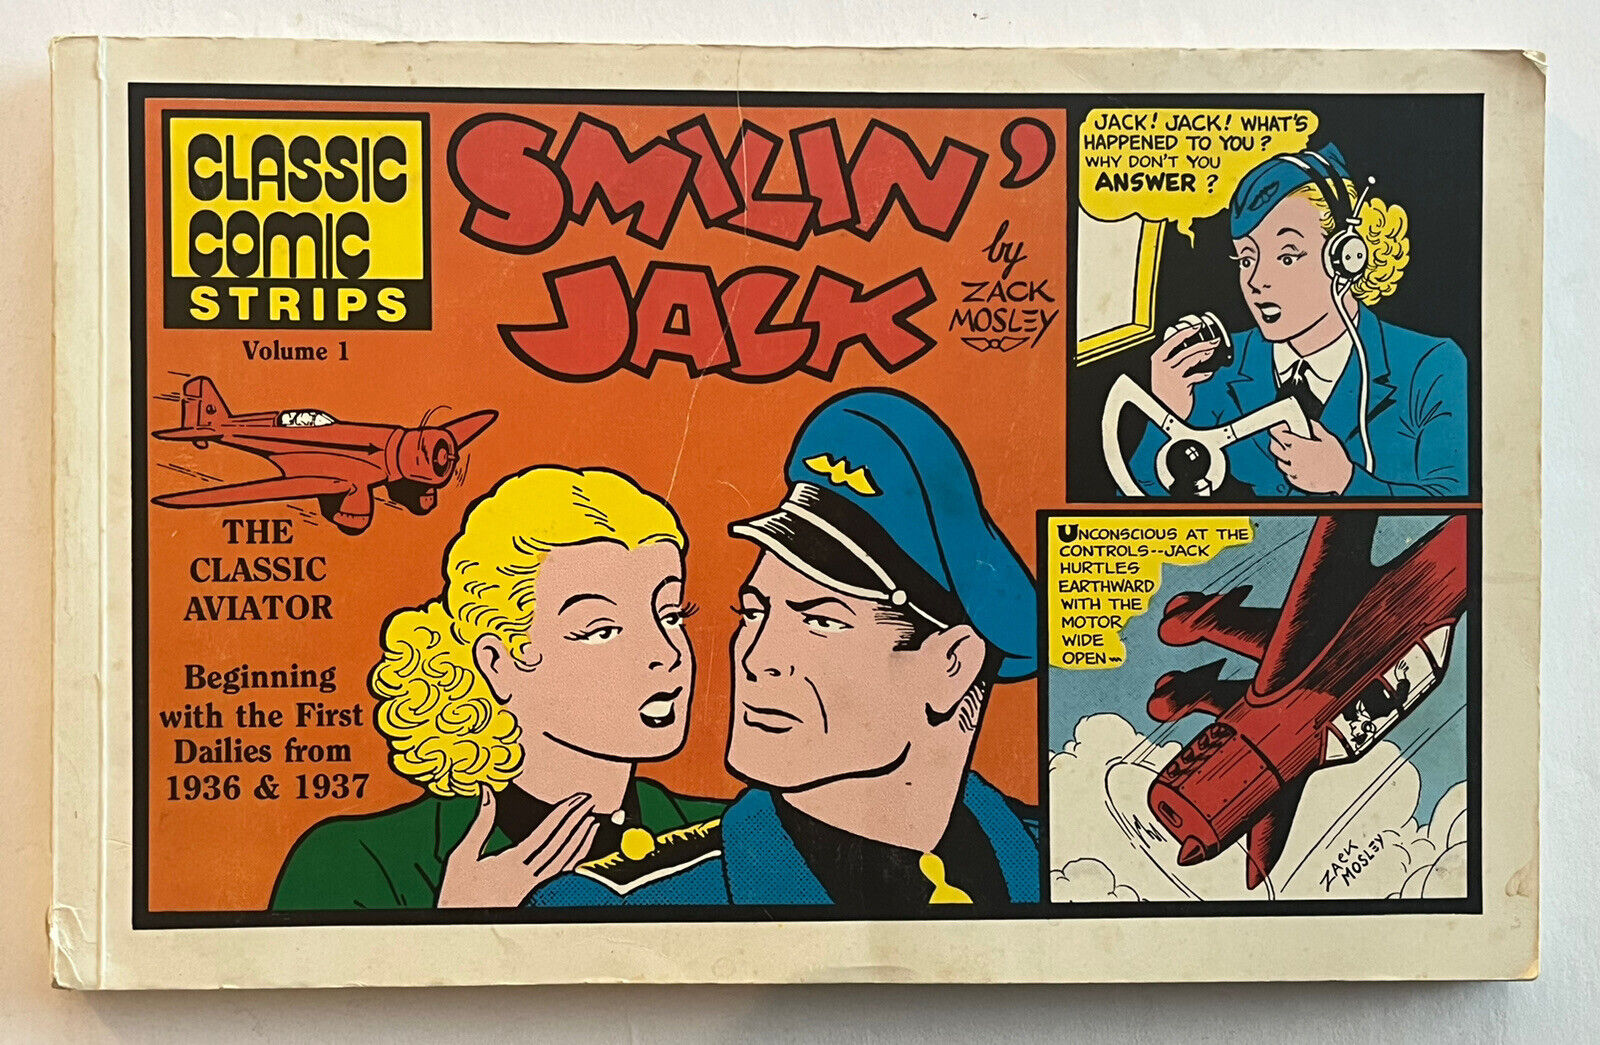 Smilin’ Jack Vol 1 Classic Comic Strips 1936 & 1937